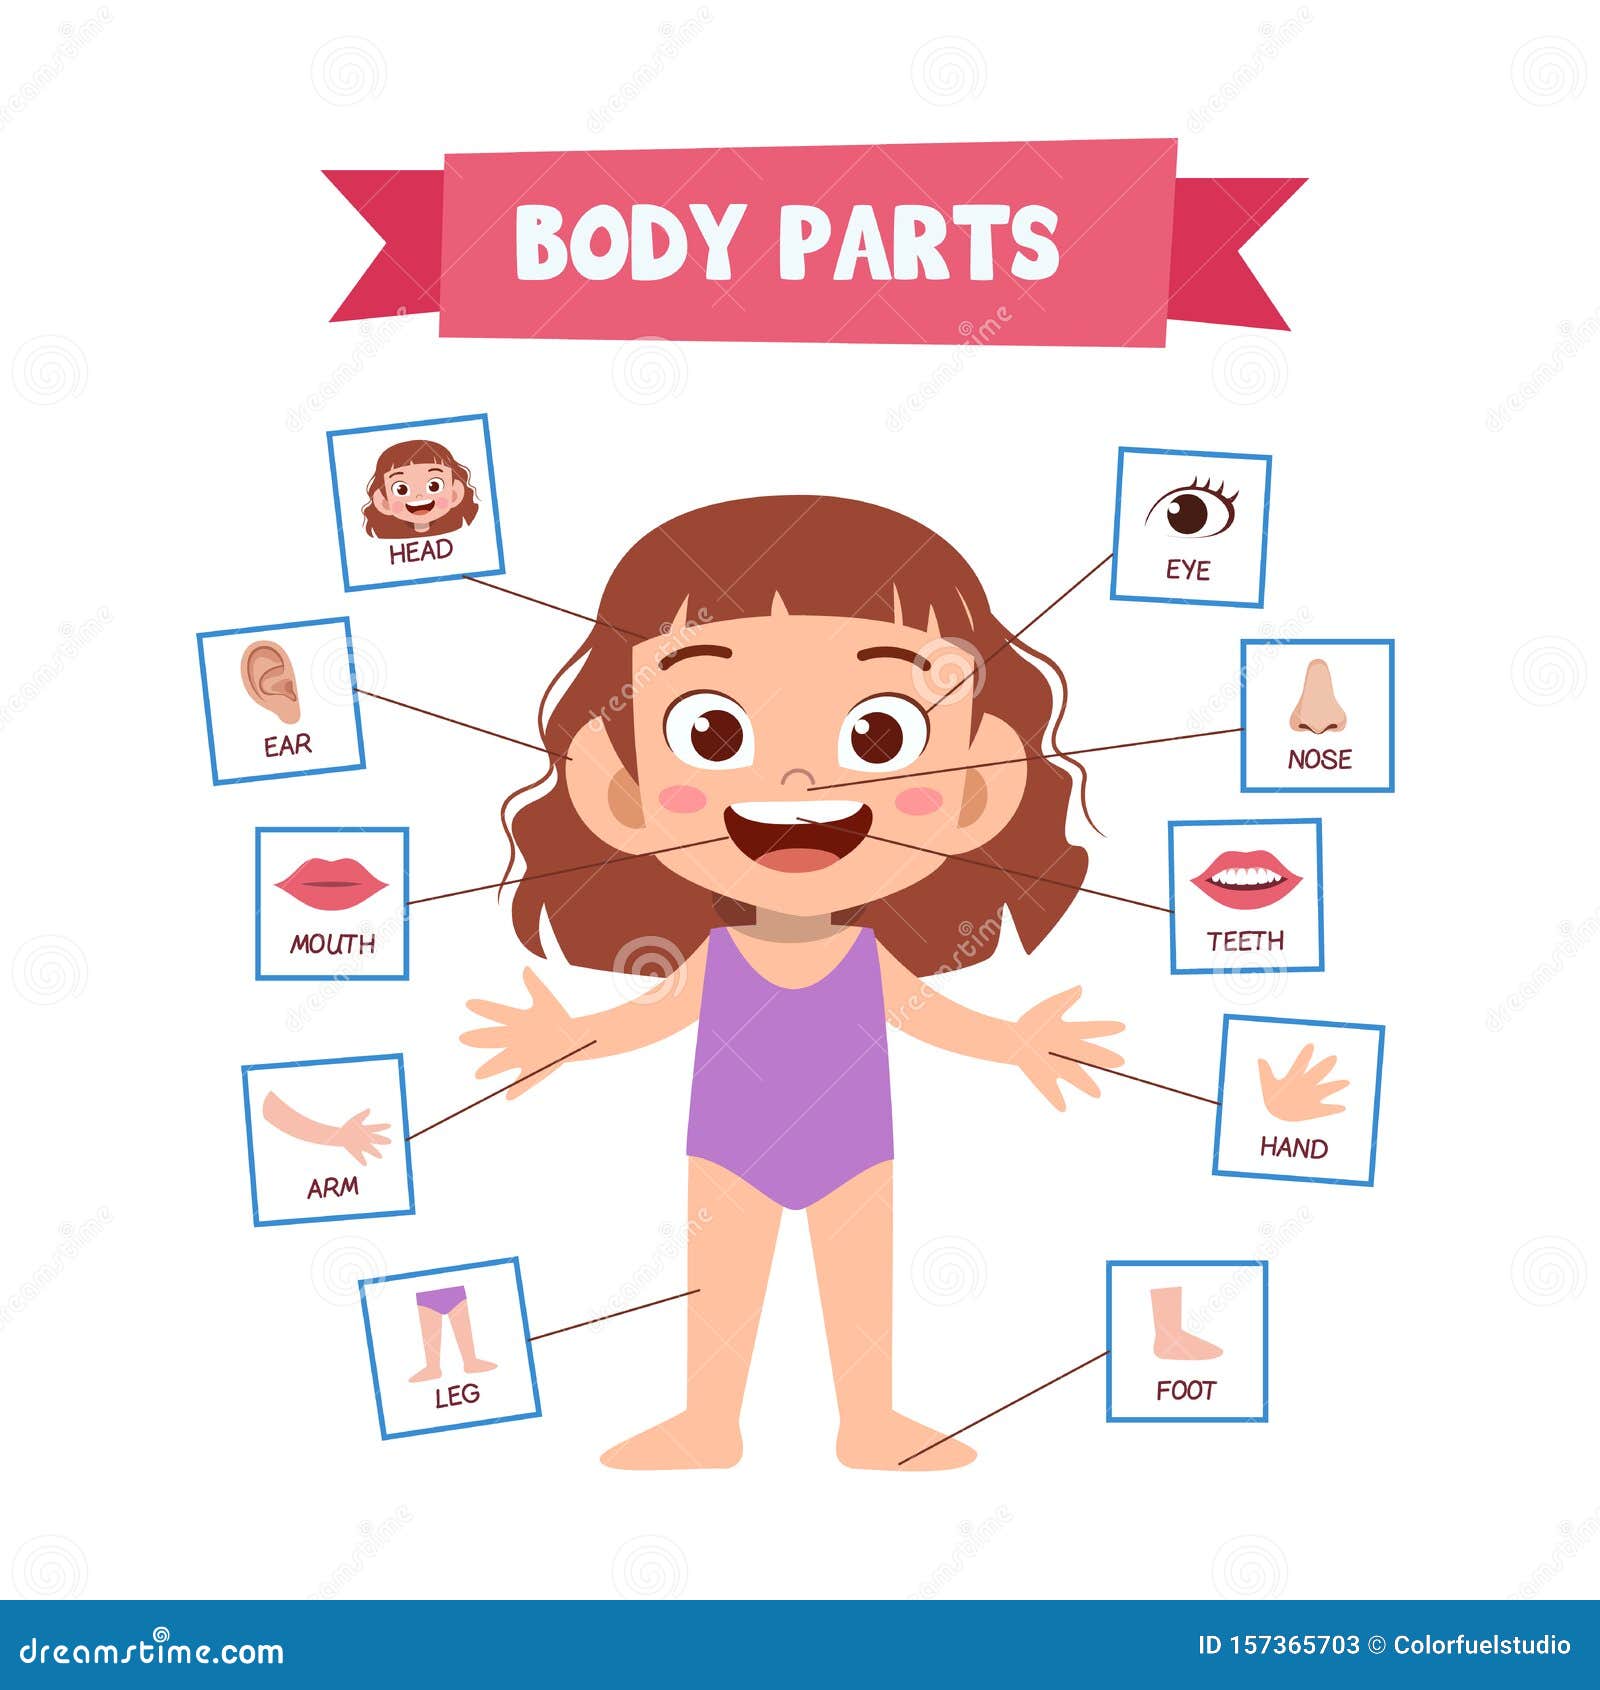 Vector Illustration Of Human Body Stock Image | CartoonDealer.com